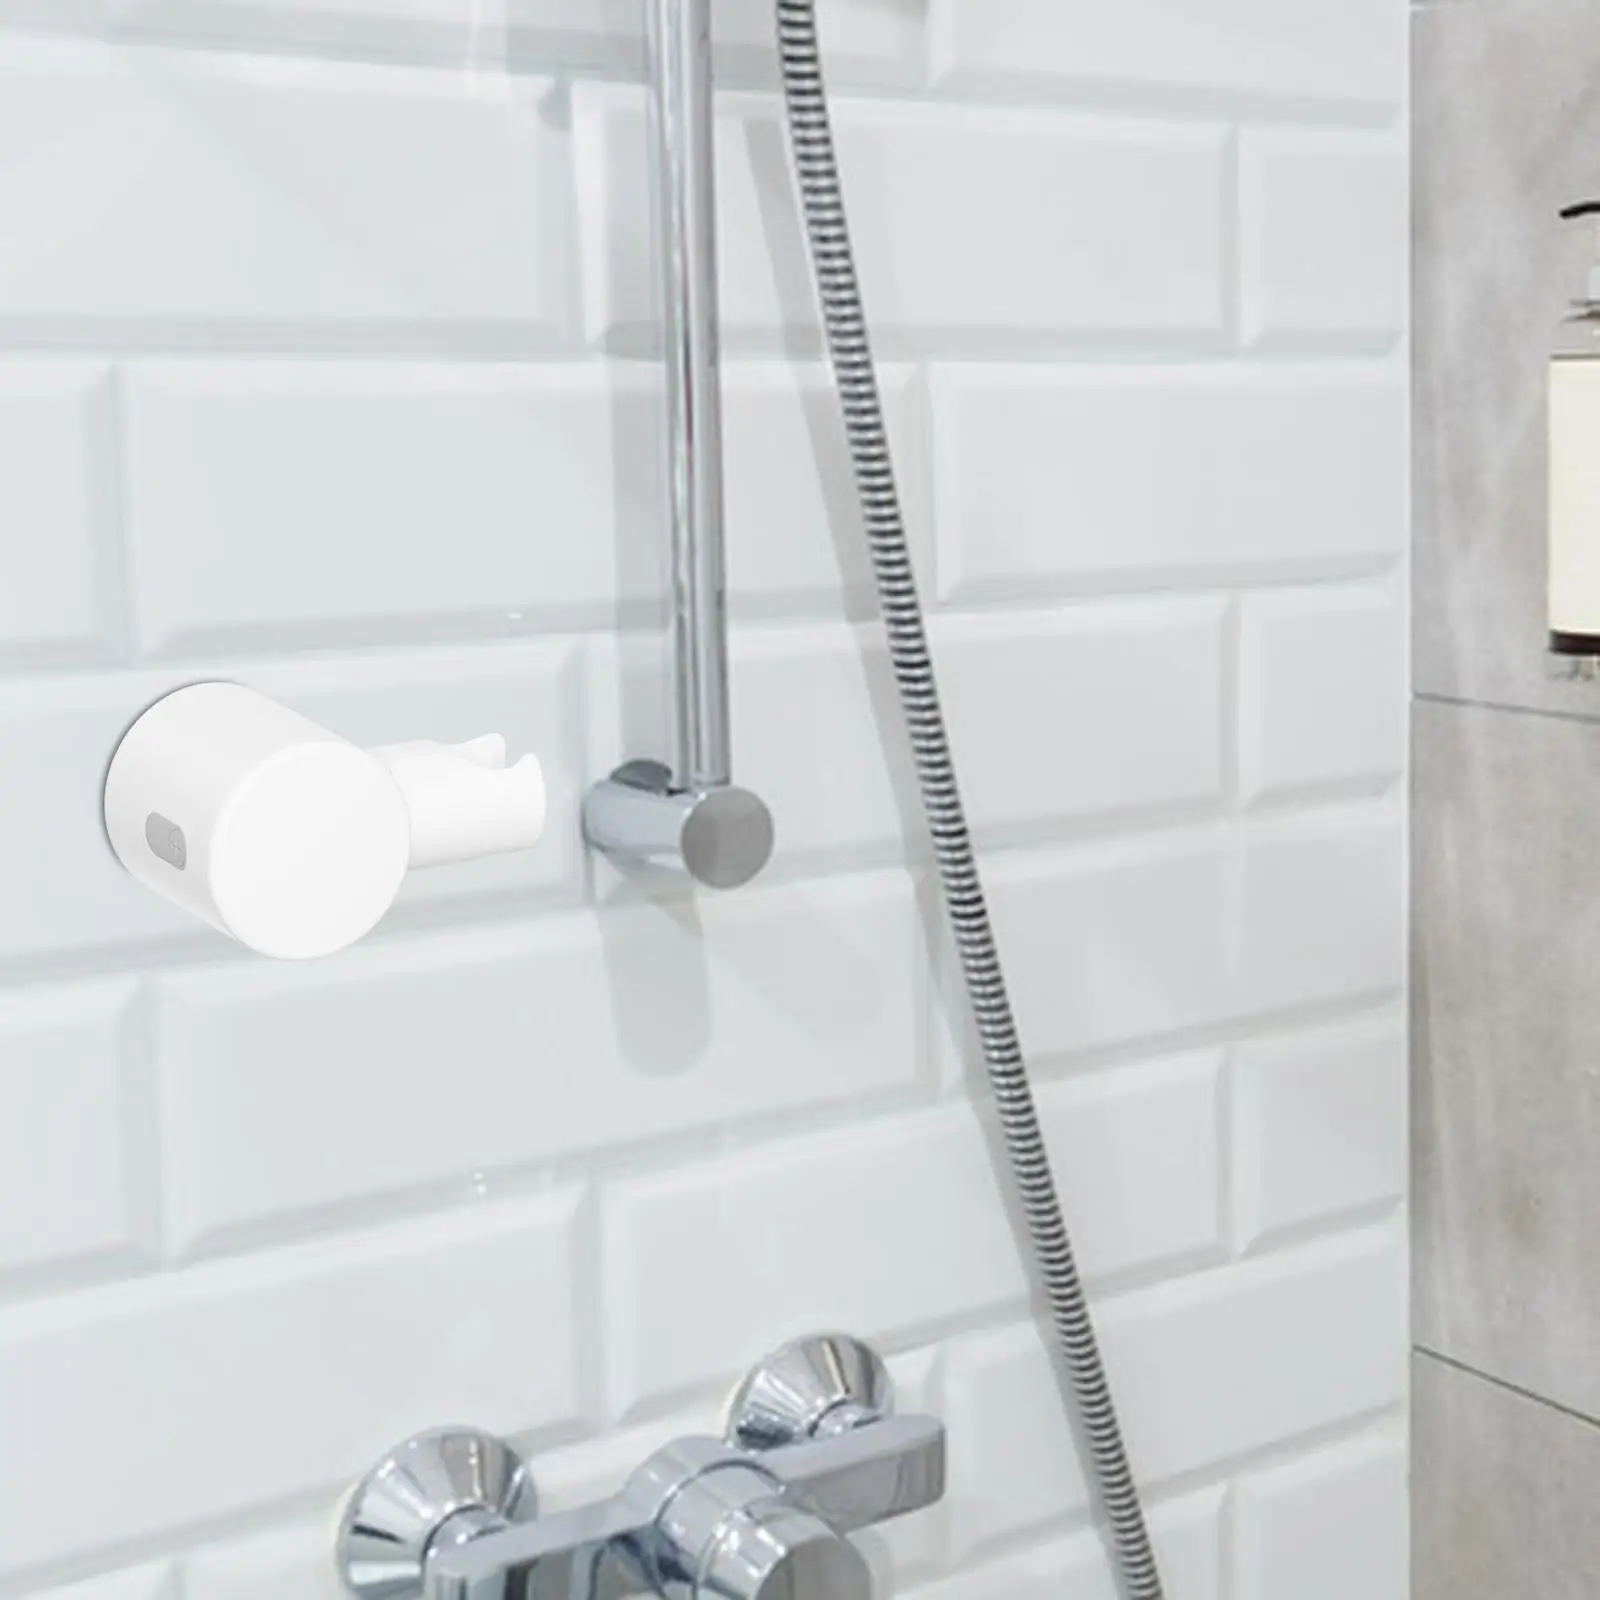 Adhesive Handheld Shower Holder Easy Install Shower Spray Holder Bathroom Accessories